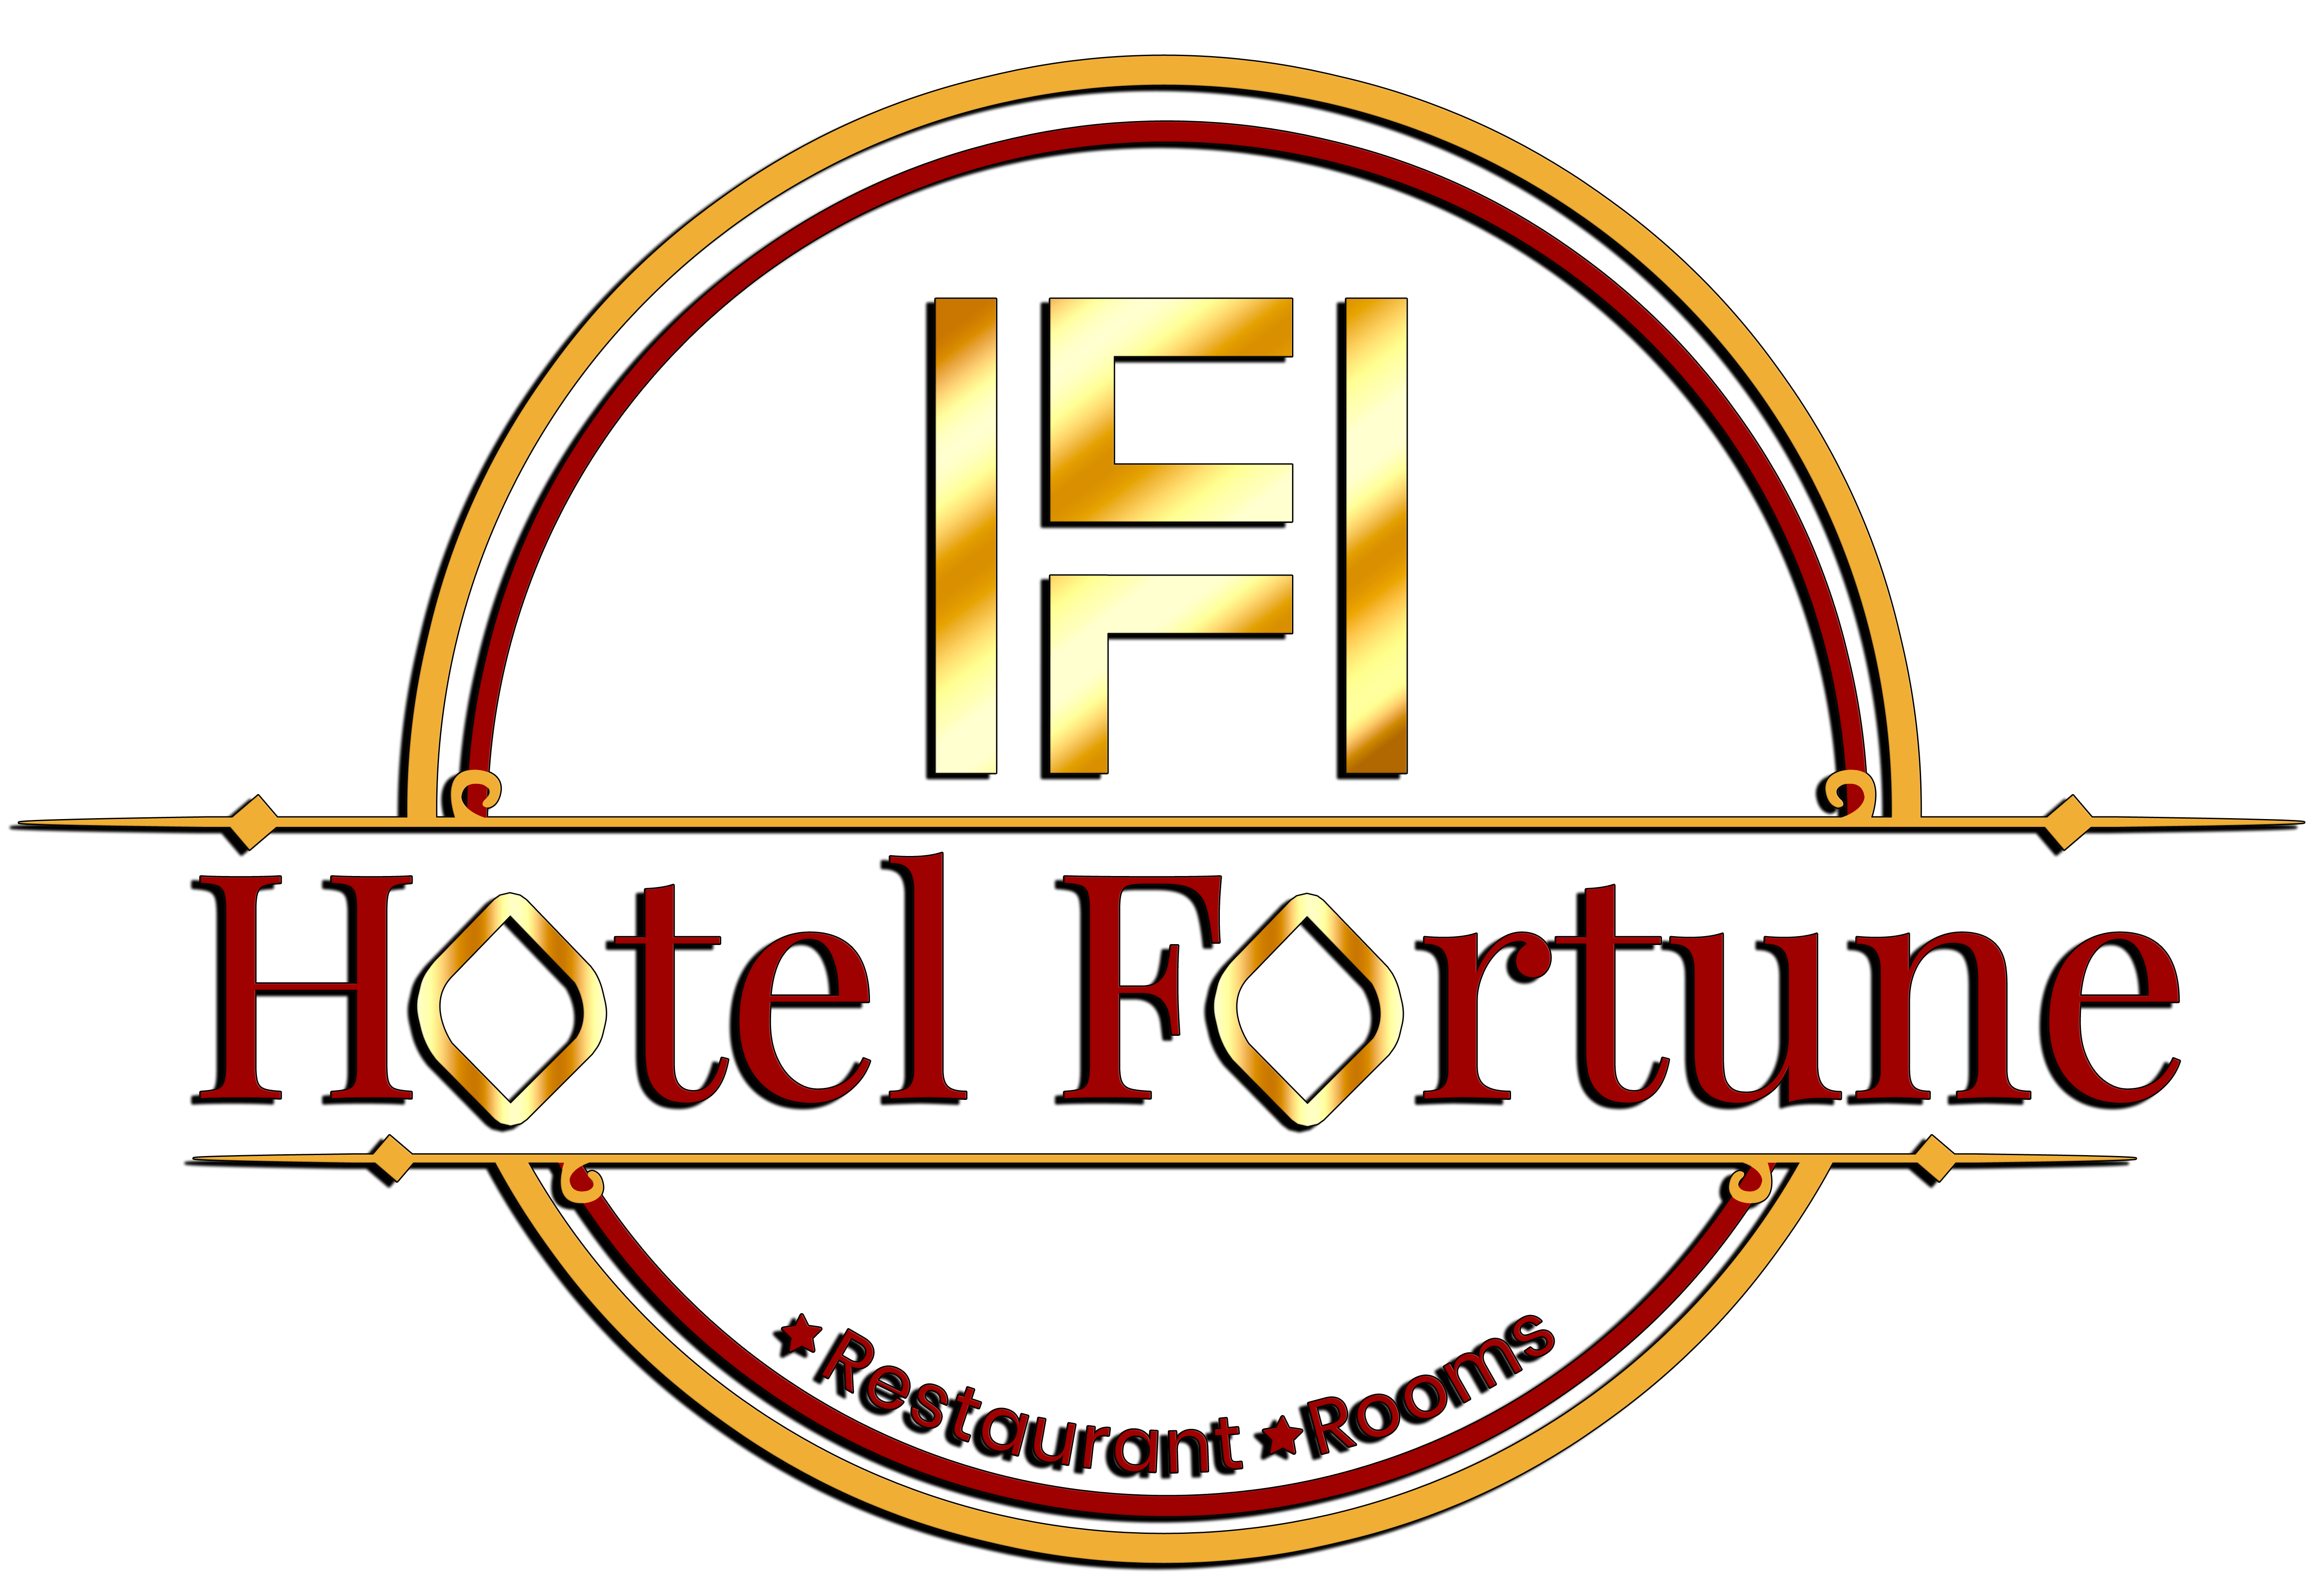 Hotel fortune|Hotel|Accomodation